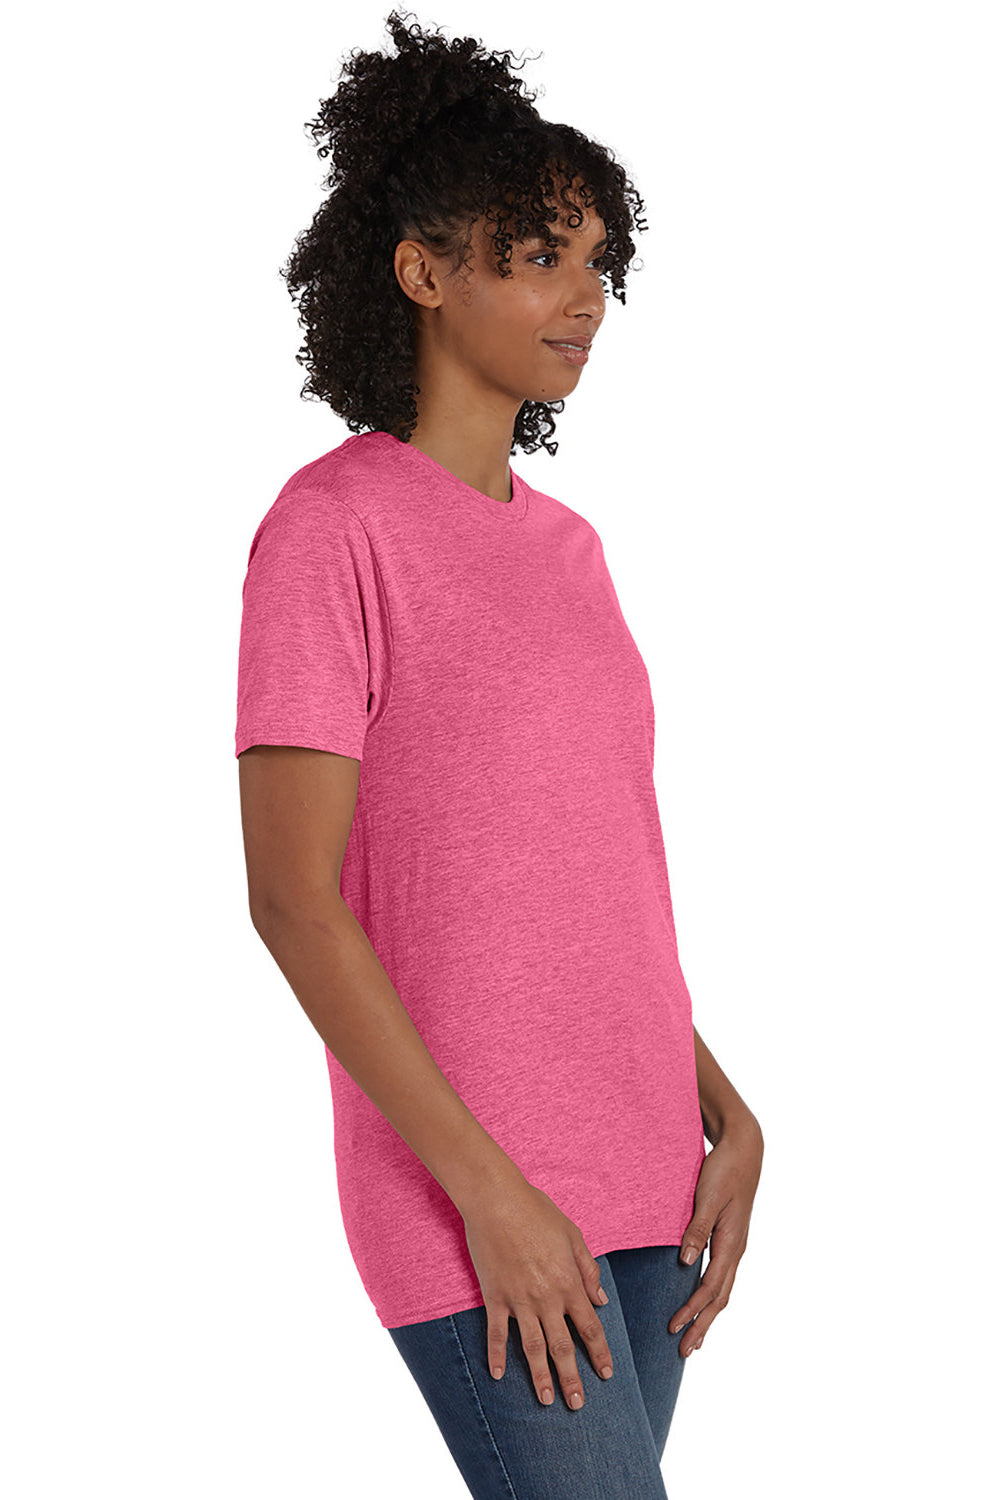 Hanes 4980 Mens Nano-T Short Sleeve Crewneck T-Shirt Heather Wow Pink 3Q